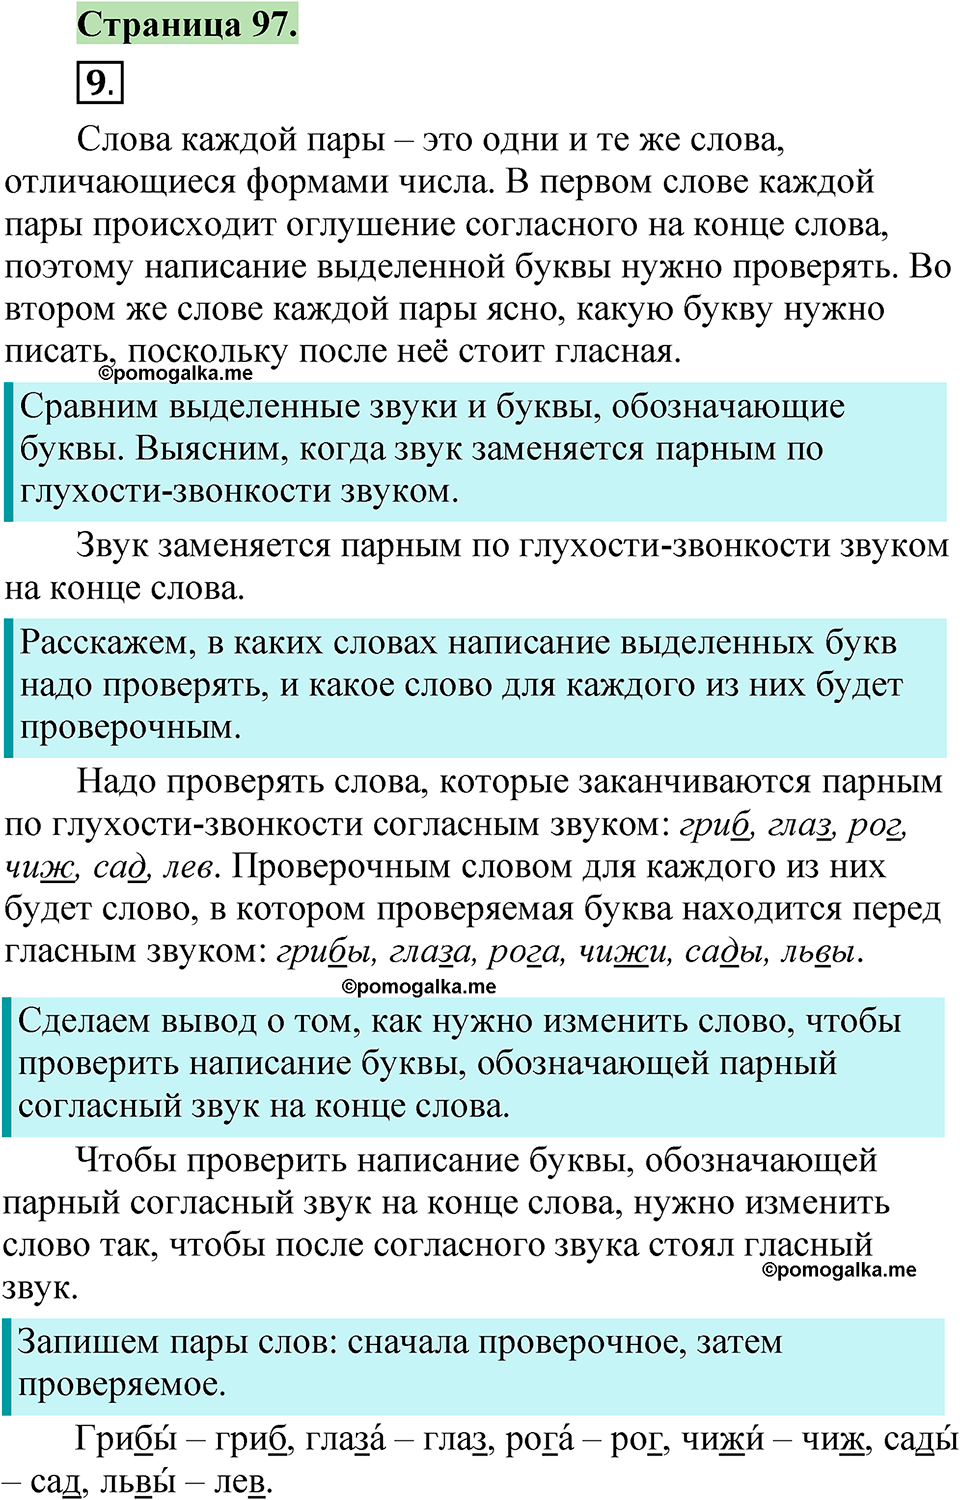 страница 97 русский язык 1 класс Канакина 2023